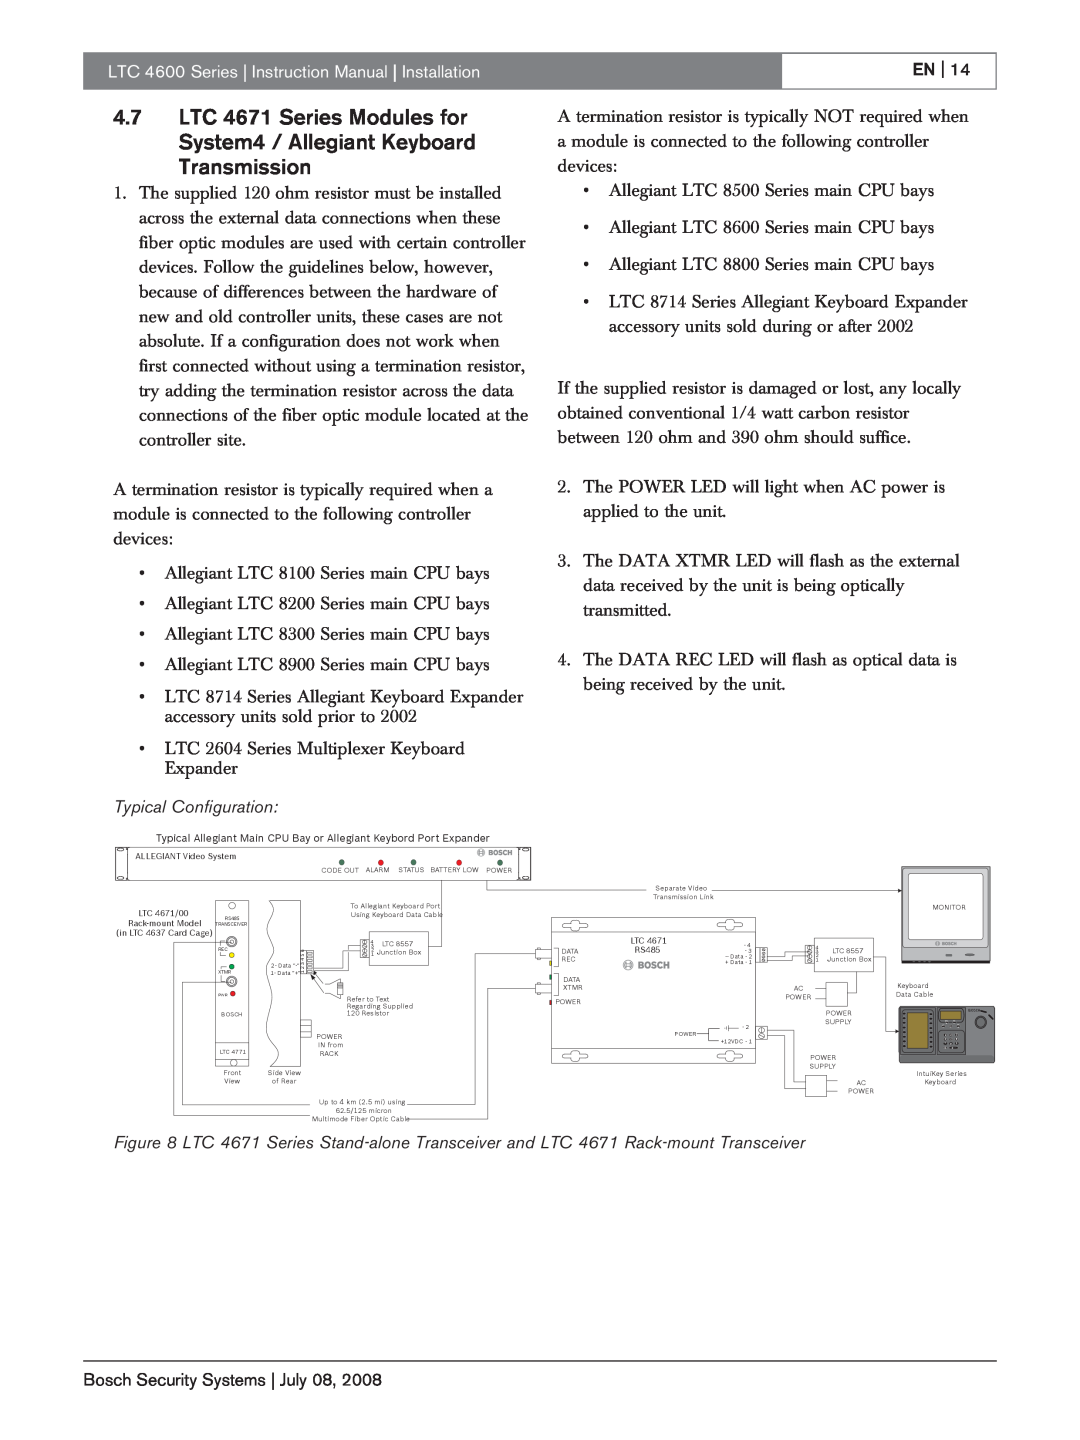 Bosch Appliances LTC 4600 instruction manual En, Allegiant LTC 8100 Series main CPU bays, Bosch Security Systems July 